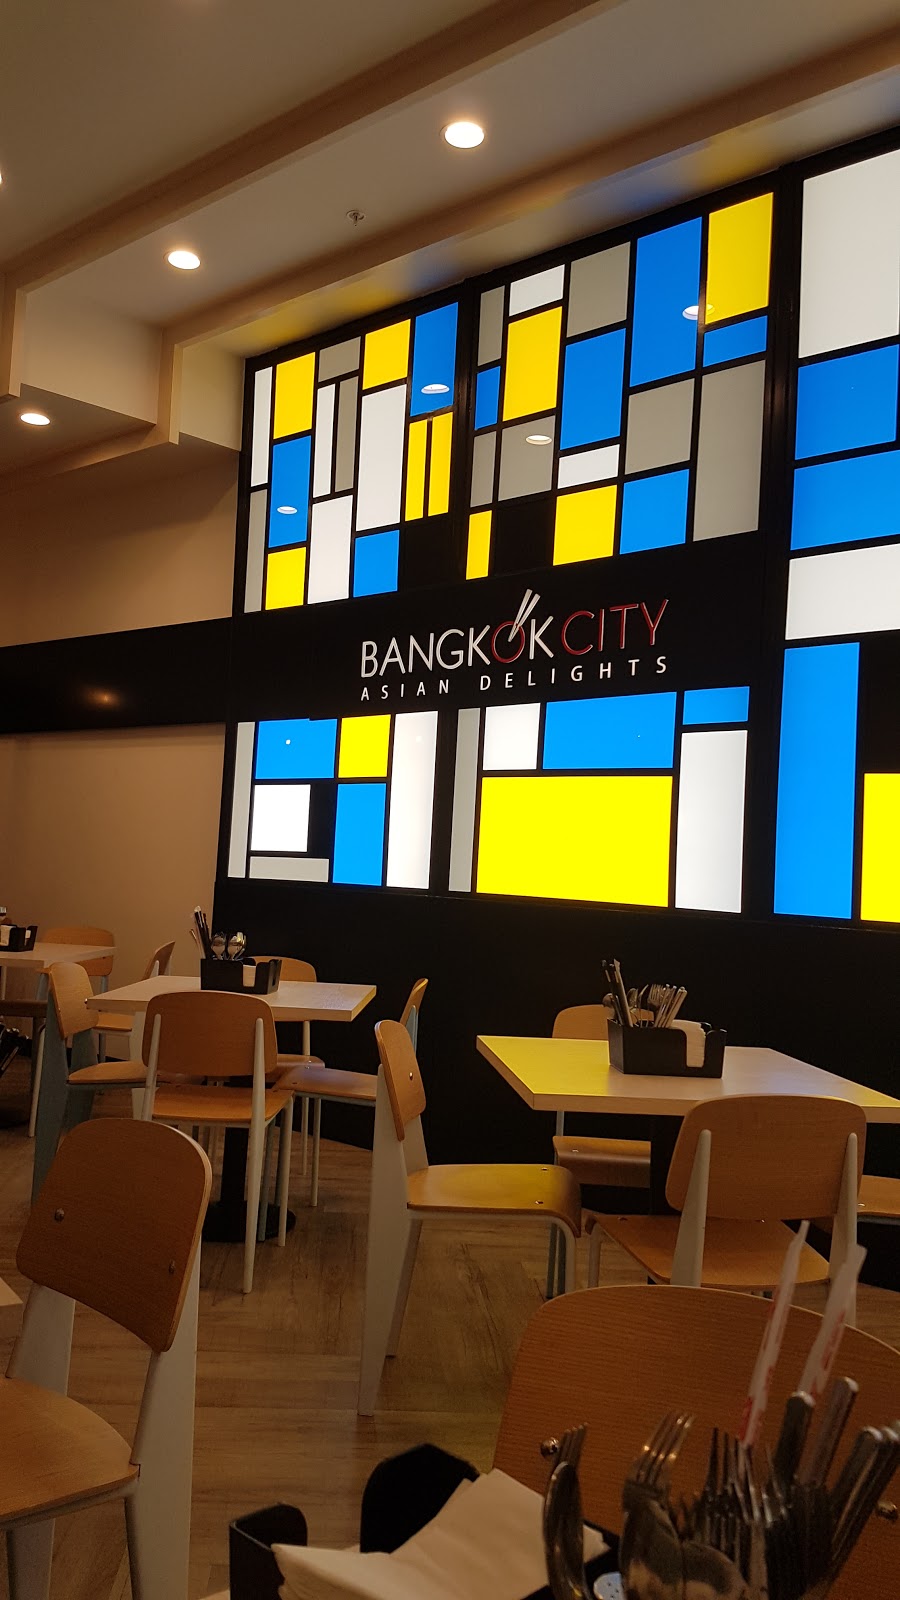 Bangkok City Asian Delights | Midland WA 6056, Australia